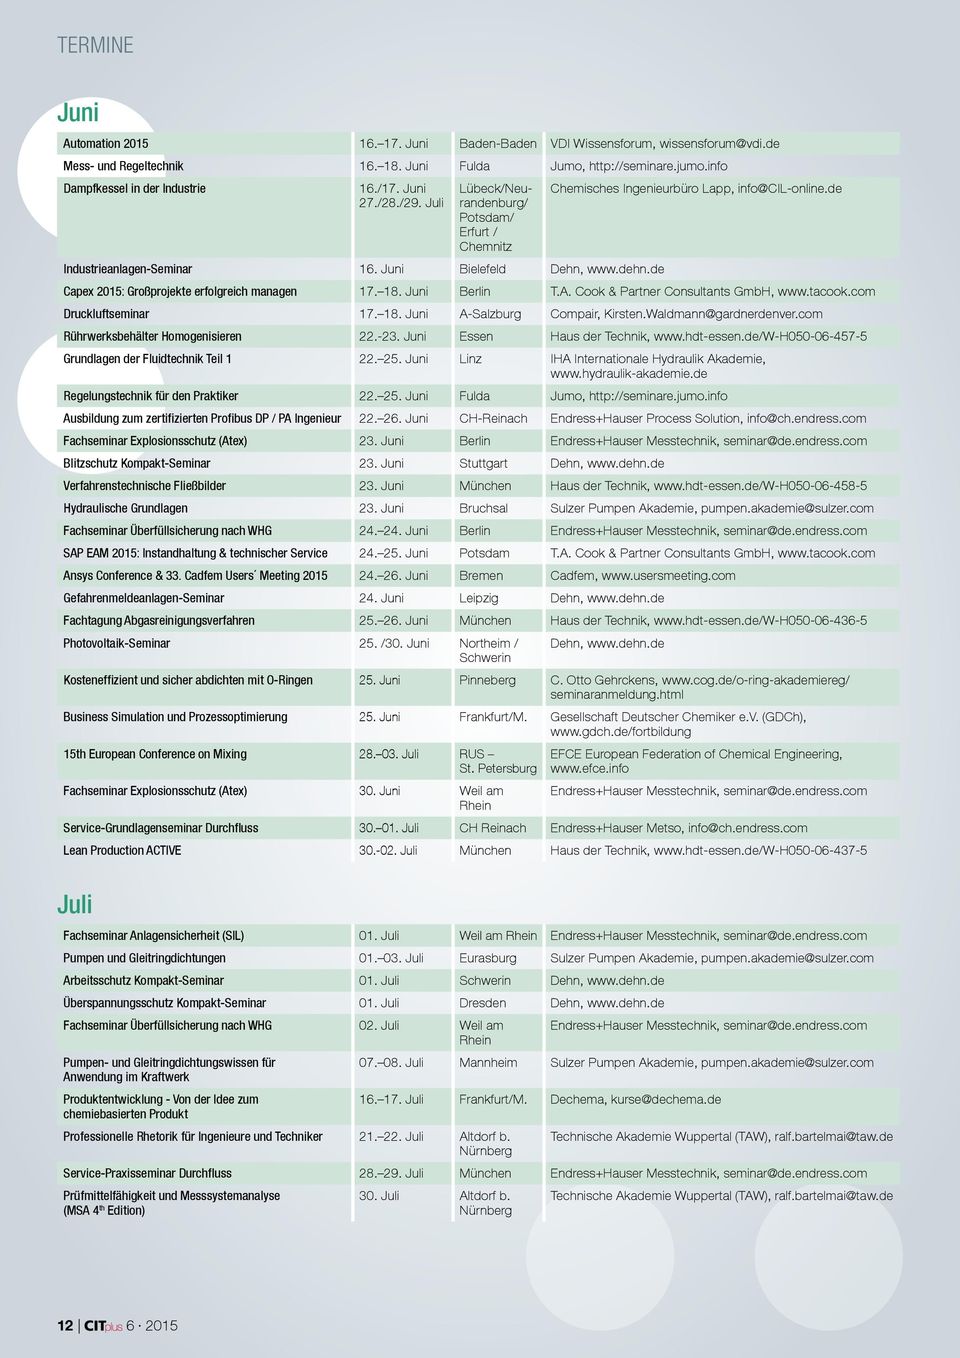 de Capex 2015: Großprojekte erfolgreich managen 17. 18. Juni Berlin T.A. Cook & Partner Consultants GmbH, www.tacook.com Druckluftseminar 17. 18. Juni A-Salzburg Compair, Kirsten.